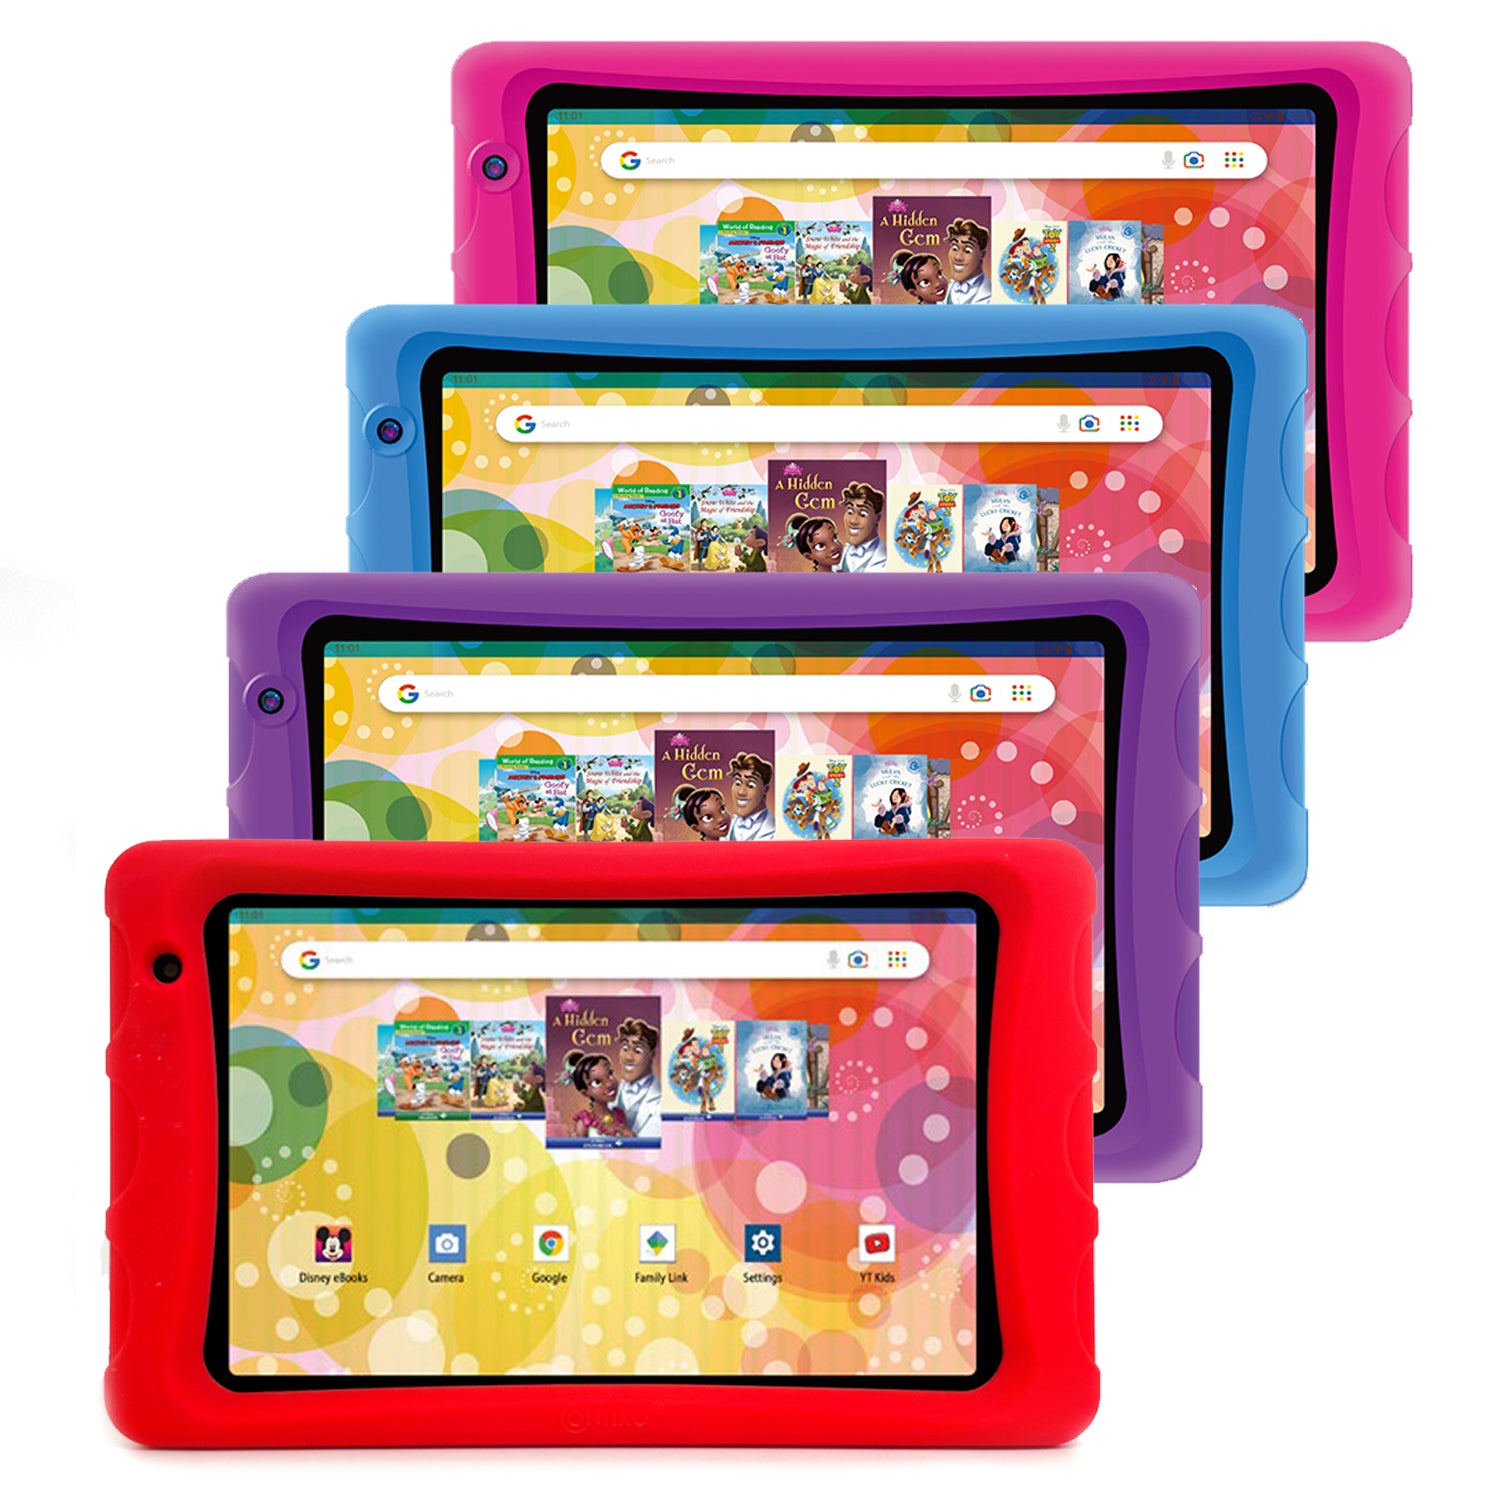 Contixo K80 8-Inch Kids Tablet Featuring 80 Disney eBooks - 2GB + 64GB